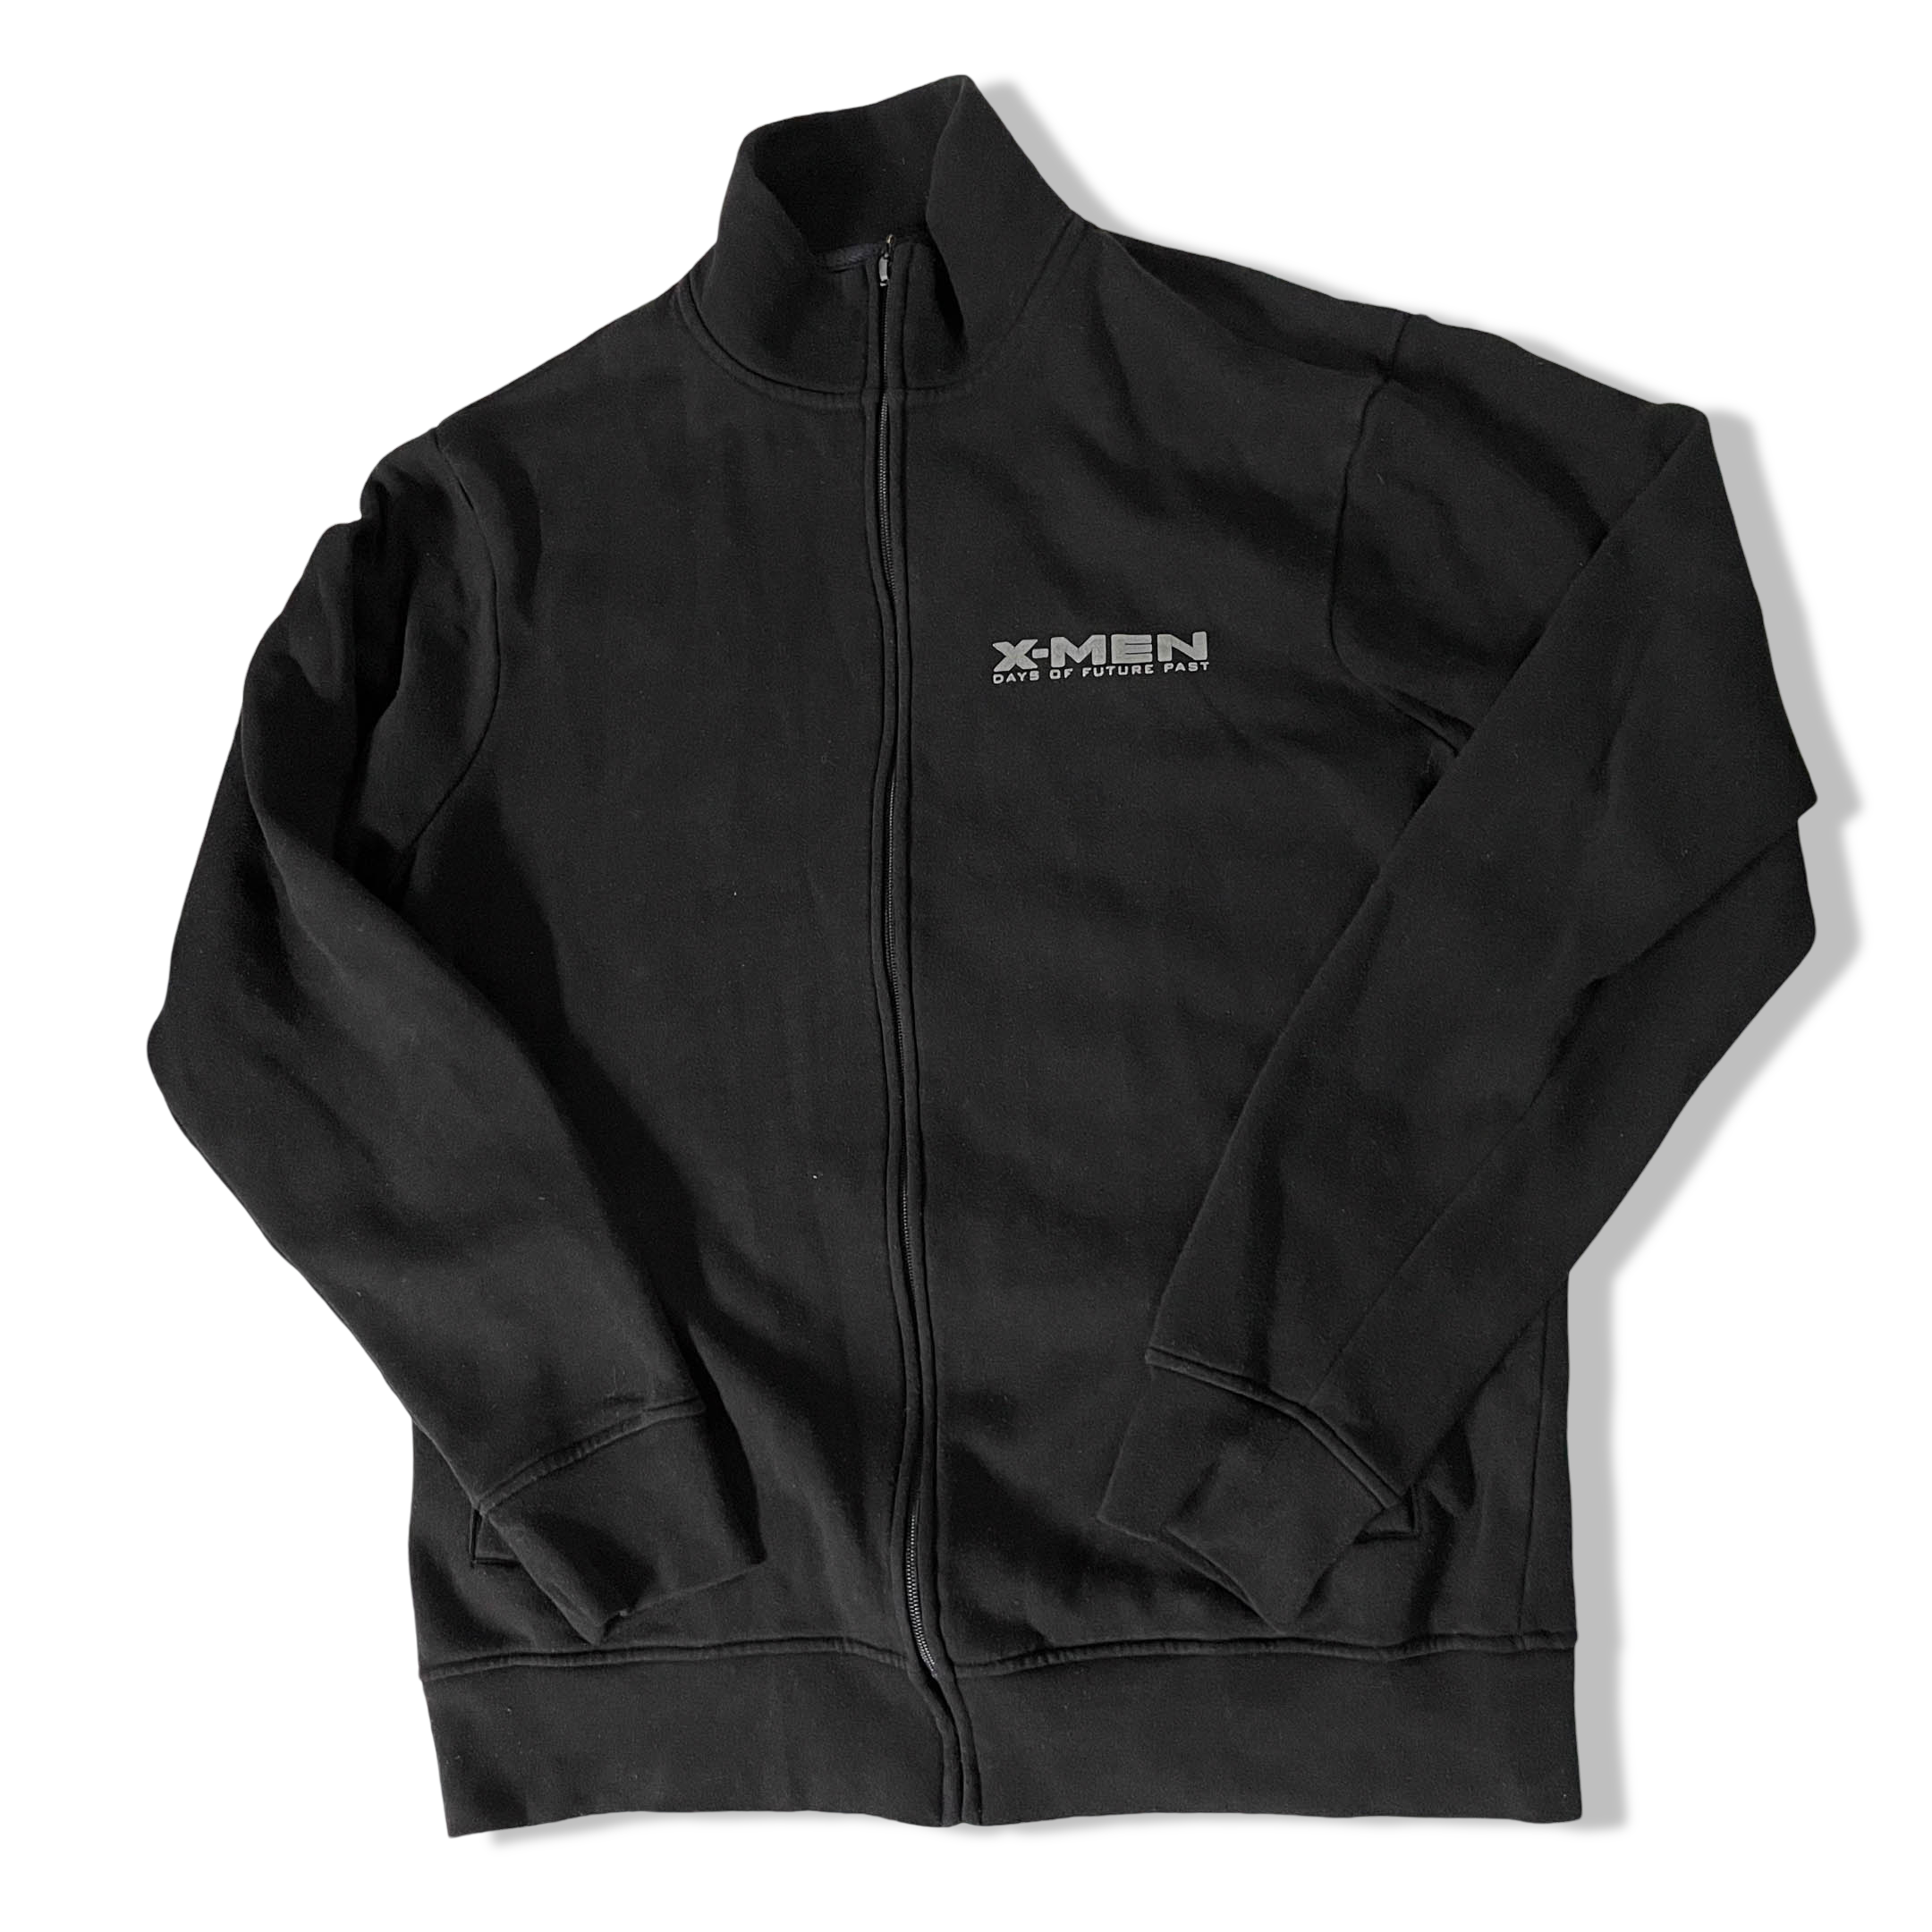 Vintage Xmen days of future past mens full zip black large jacket| L| SKU 3679